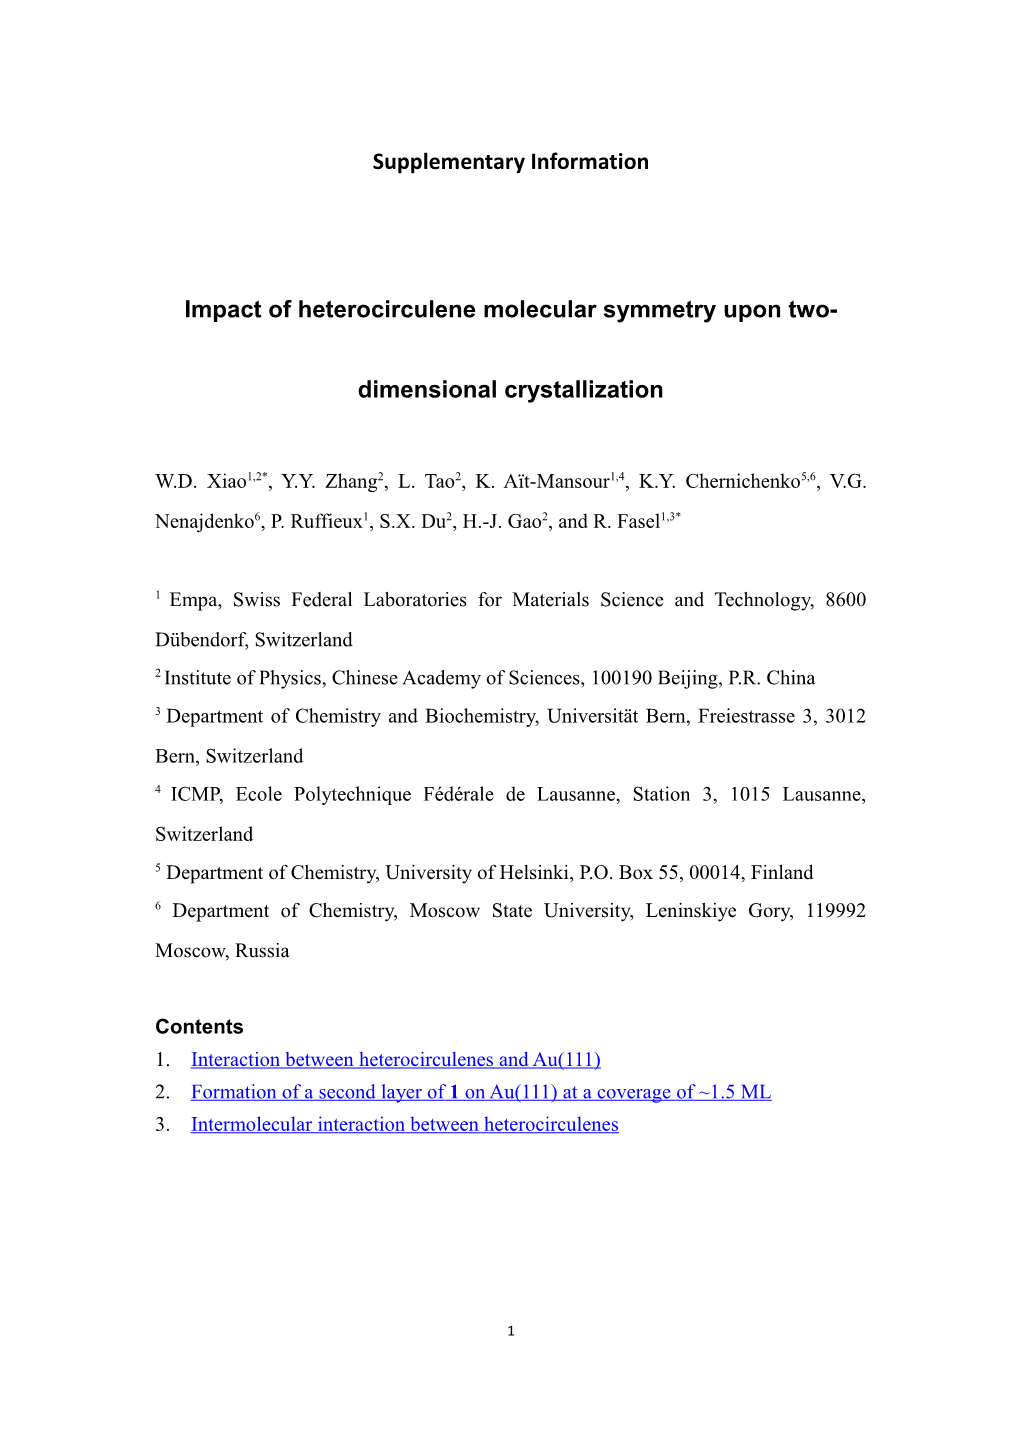 Impact of Heterocirculene Molecular Symmetry Upon Two-Dimensional Crystallization